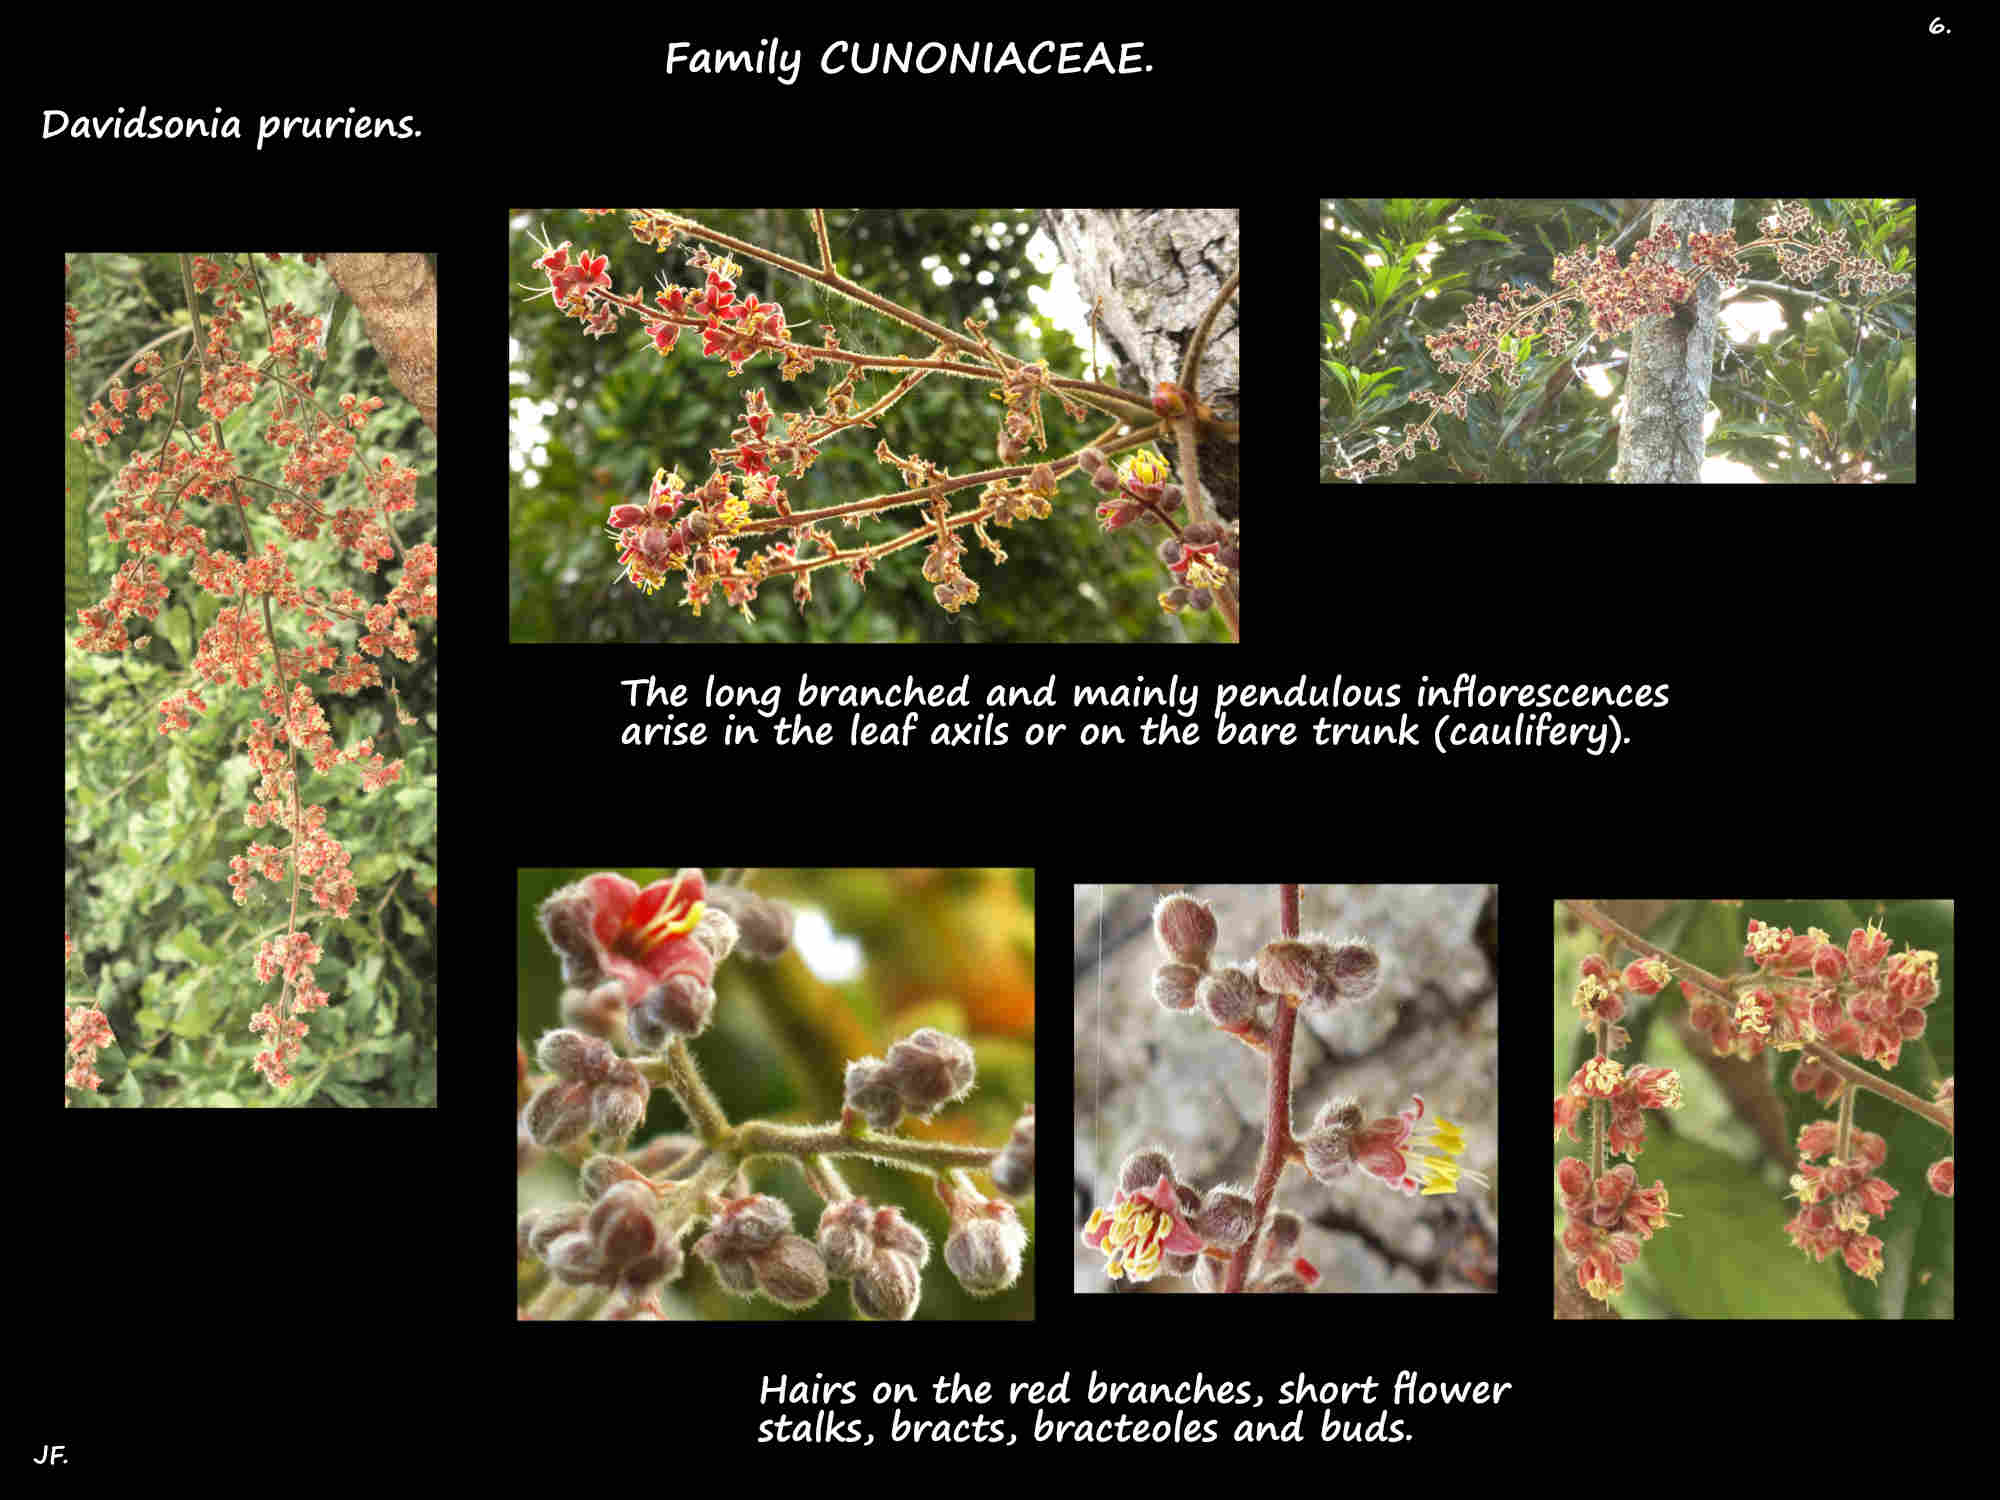 6 Davidsonia pruriens inflorescences